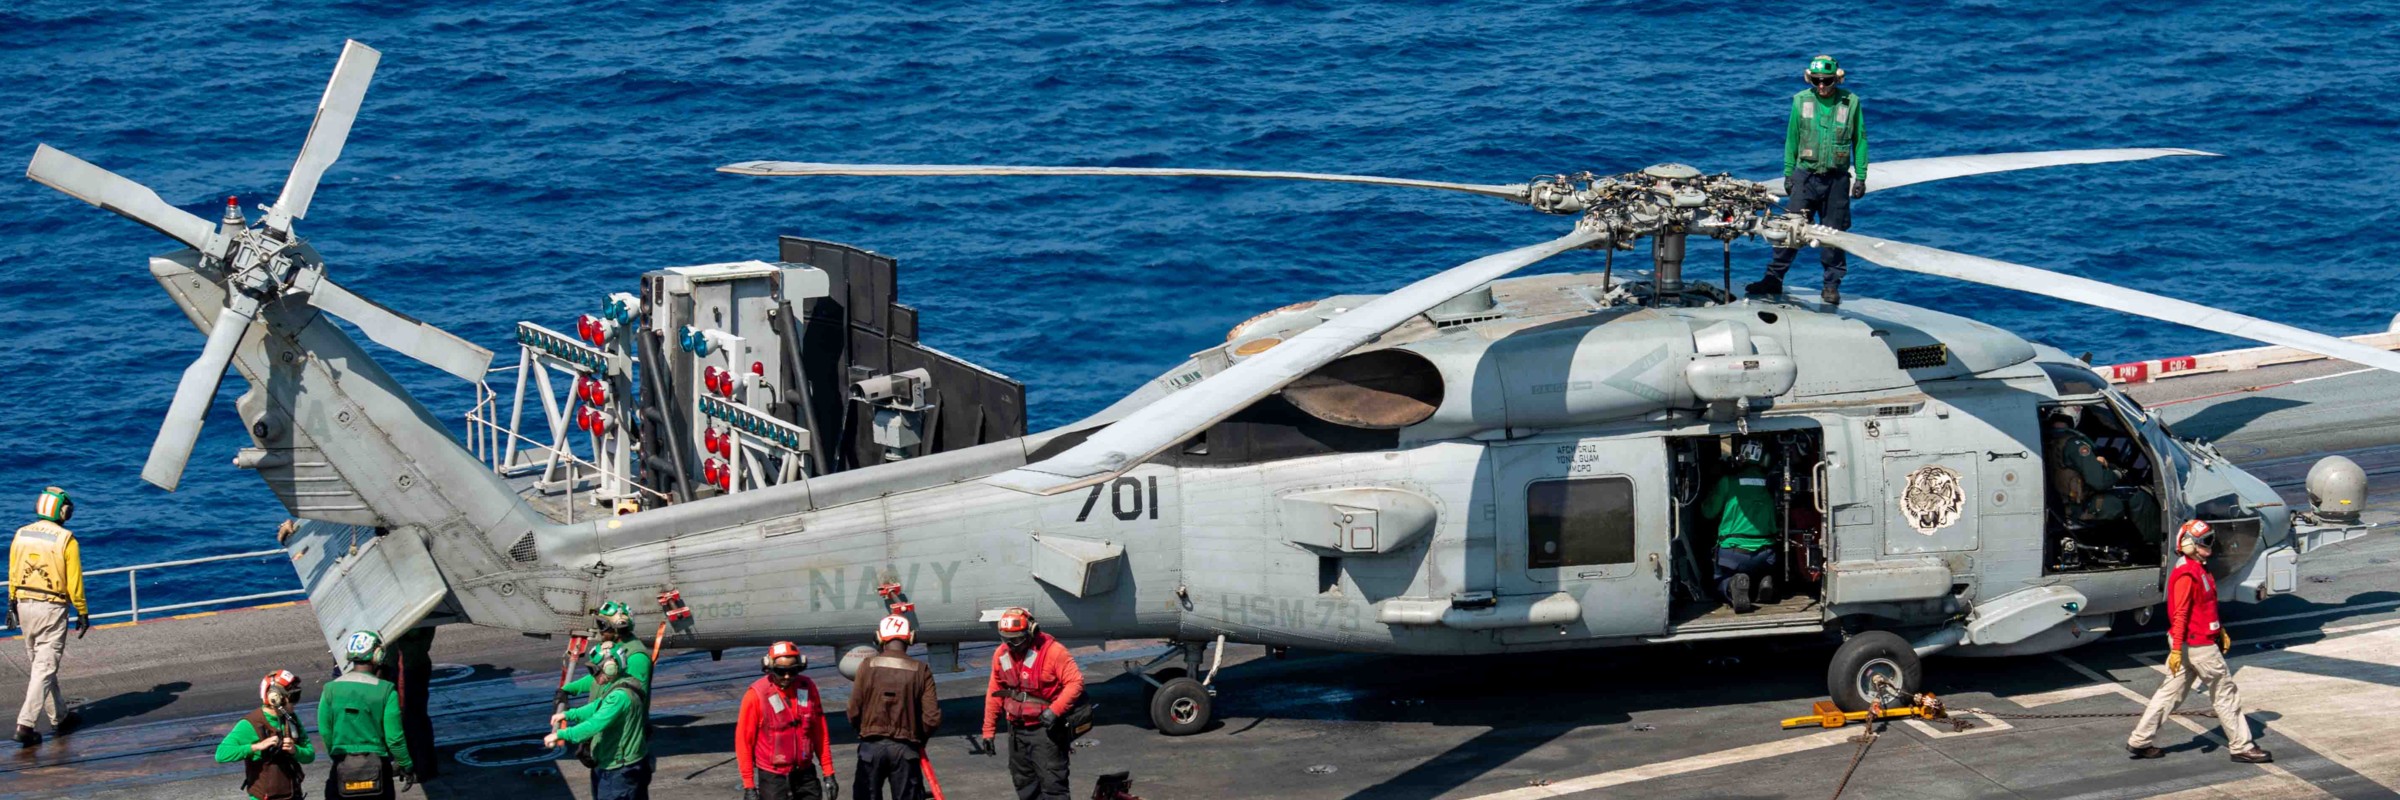 hsm-73 battlecats helicopter maritime strike squadron mh-60r seahawk cvw-17 cvn-68 uss nimitz 106